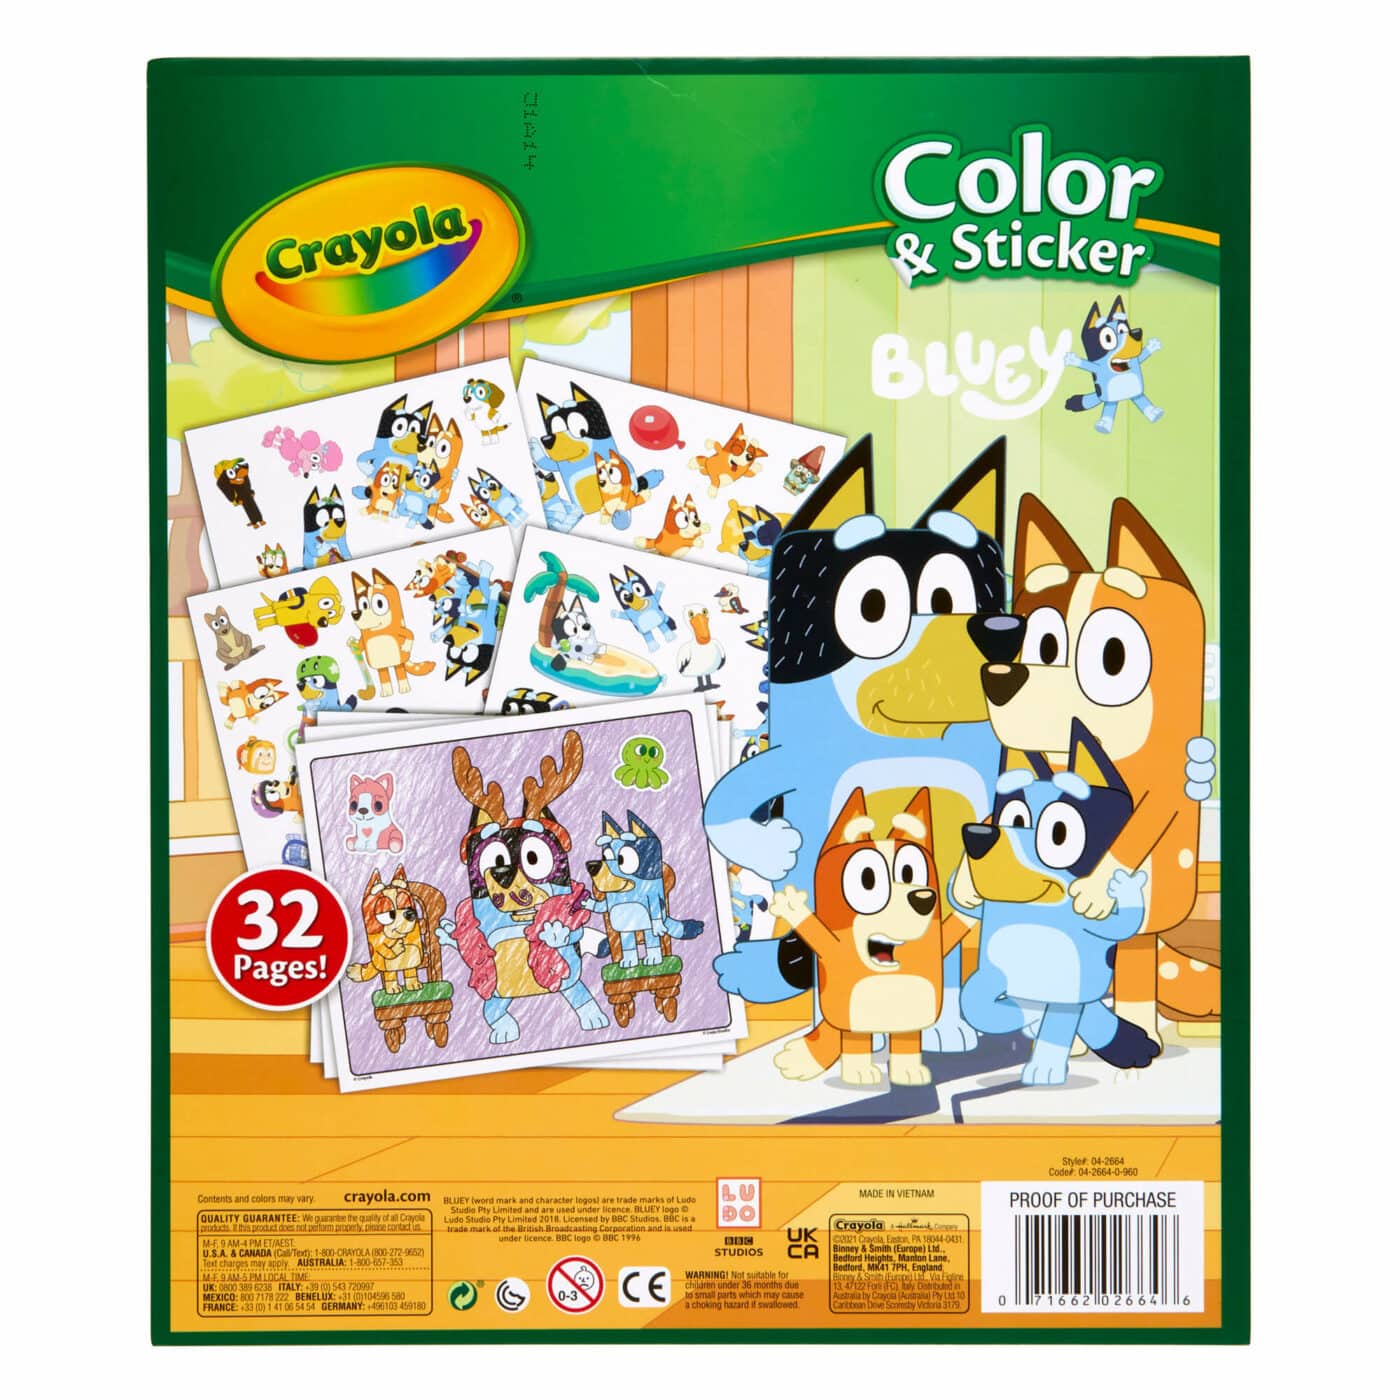 Crayola - Colour & Sticker Book - Bluey5